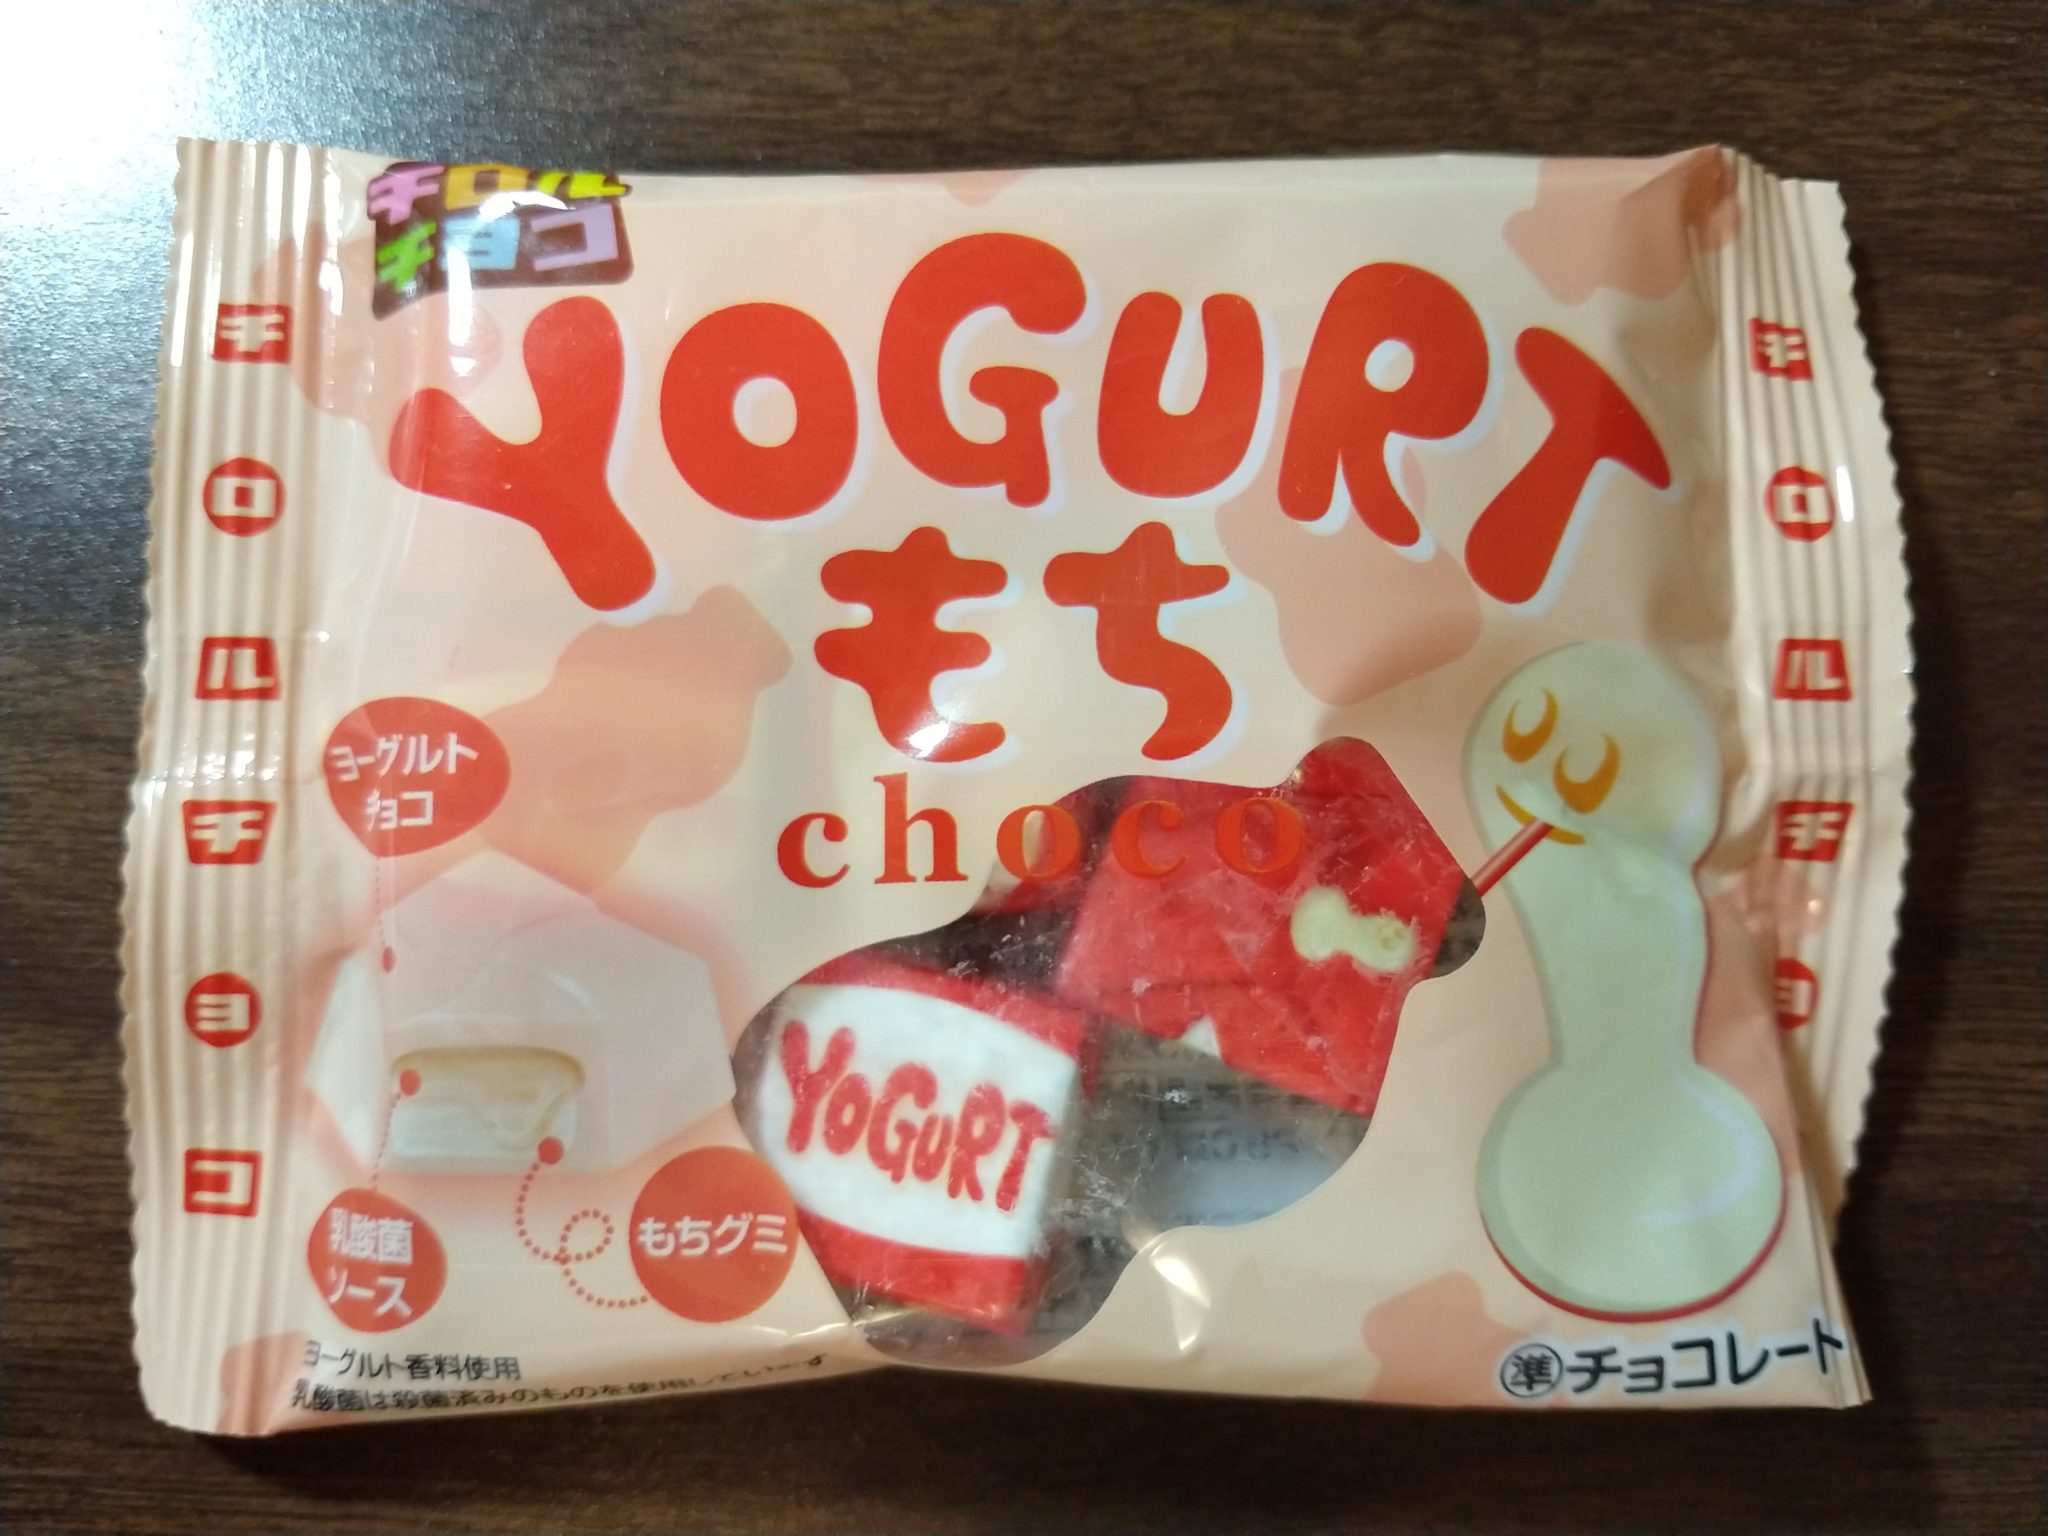 Tirol Chocolate – Yogurt Mochi